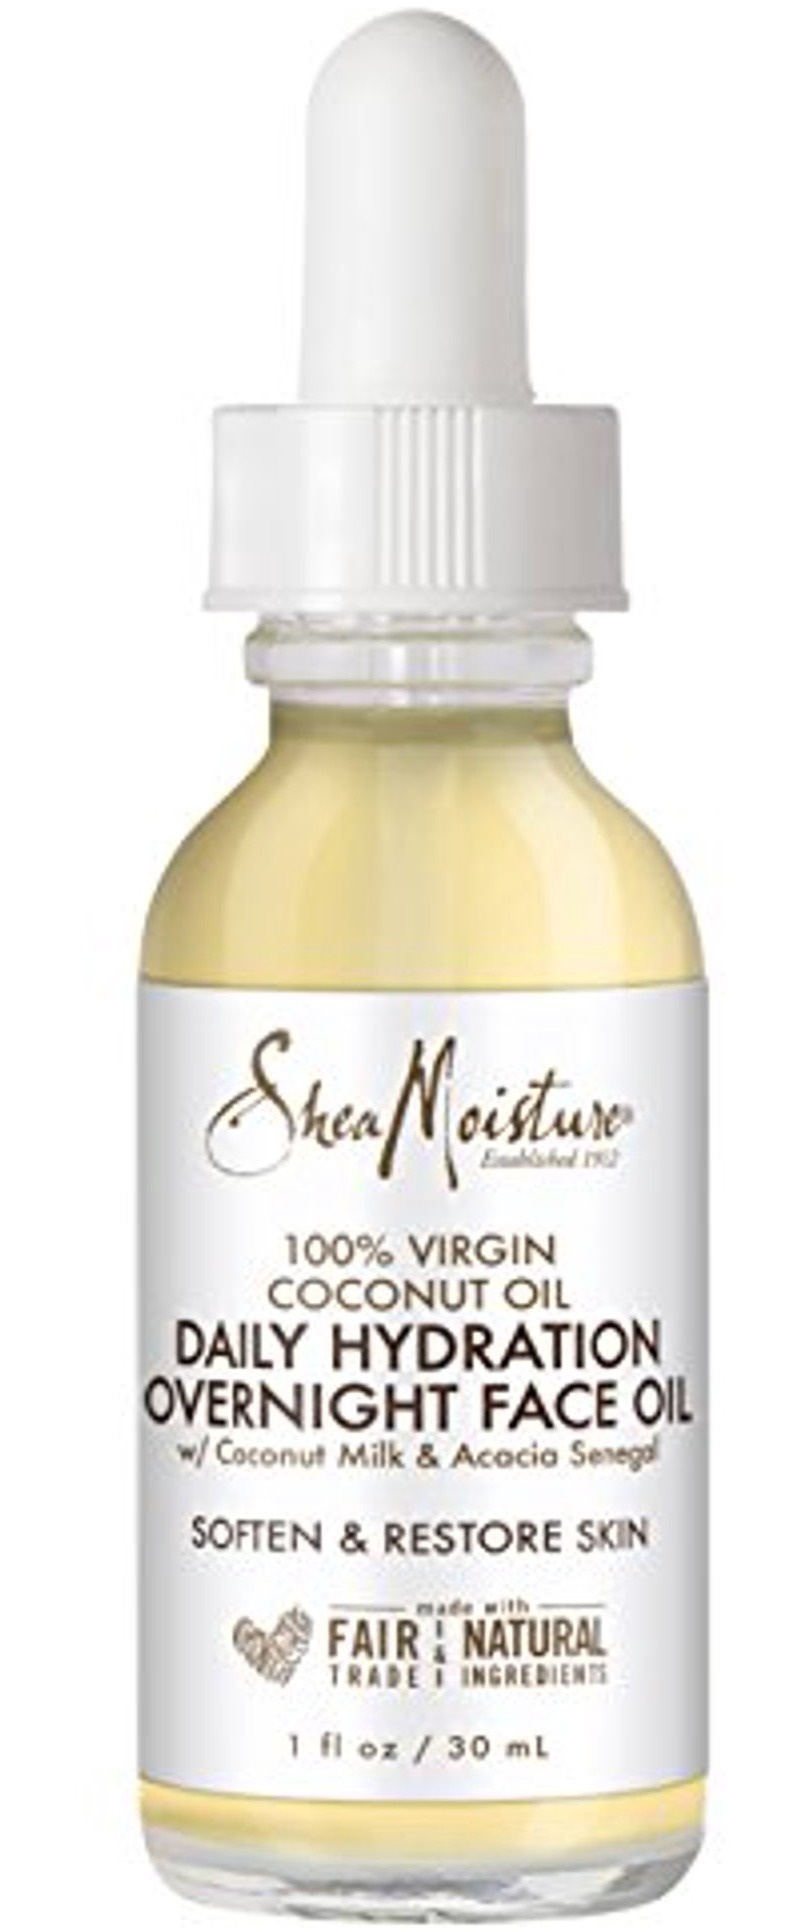 SheaMoisture Daily Hydration Overnight Face Oil